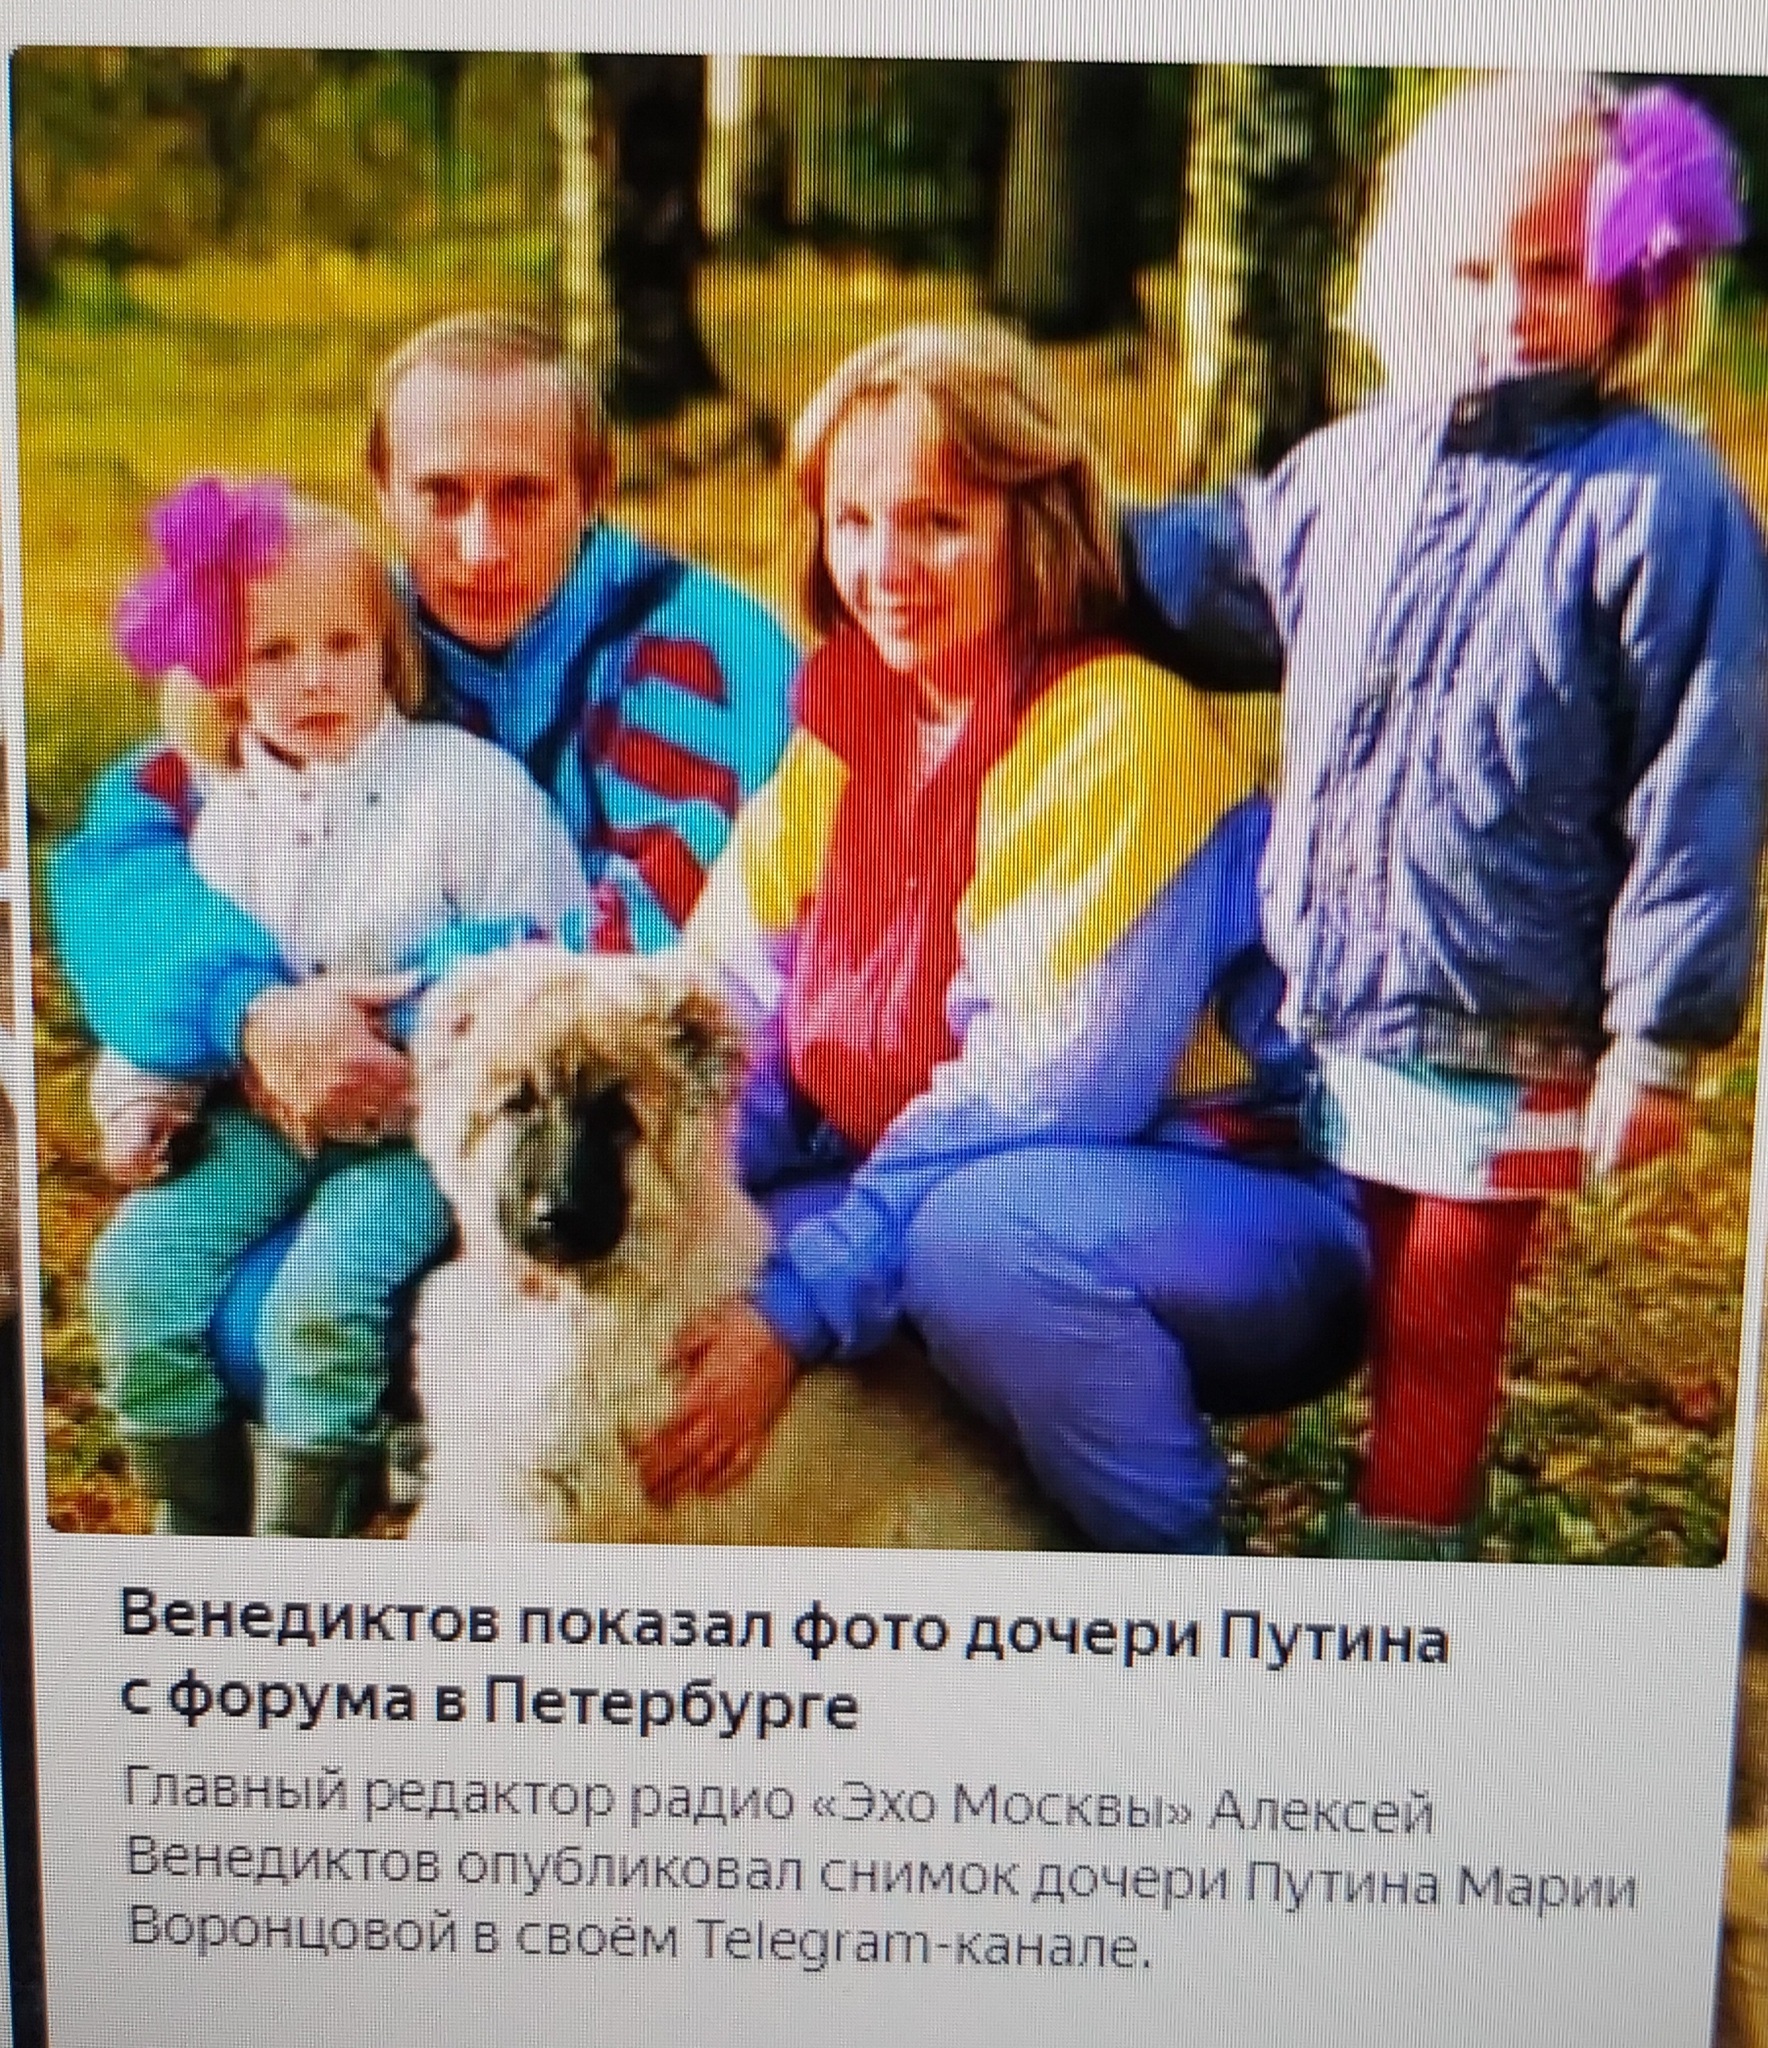 Daughters forum. Дочь Путина. Дочери Путина фото. Венедиктов показал фото дочери Путина.